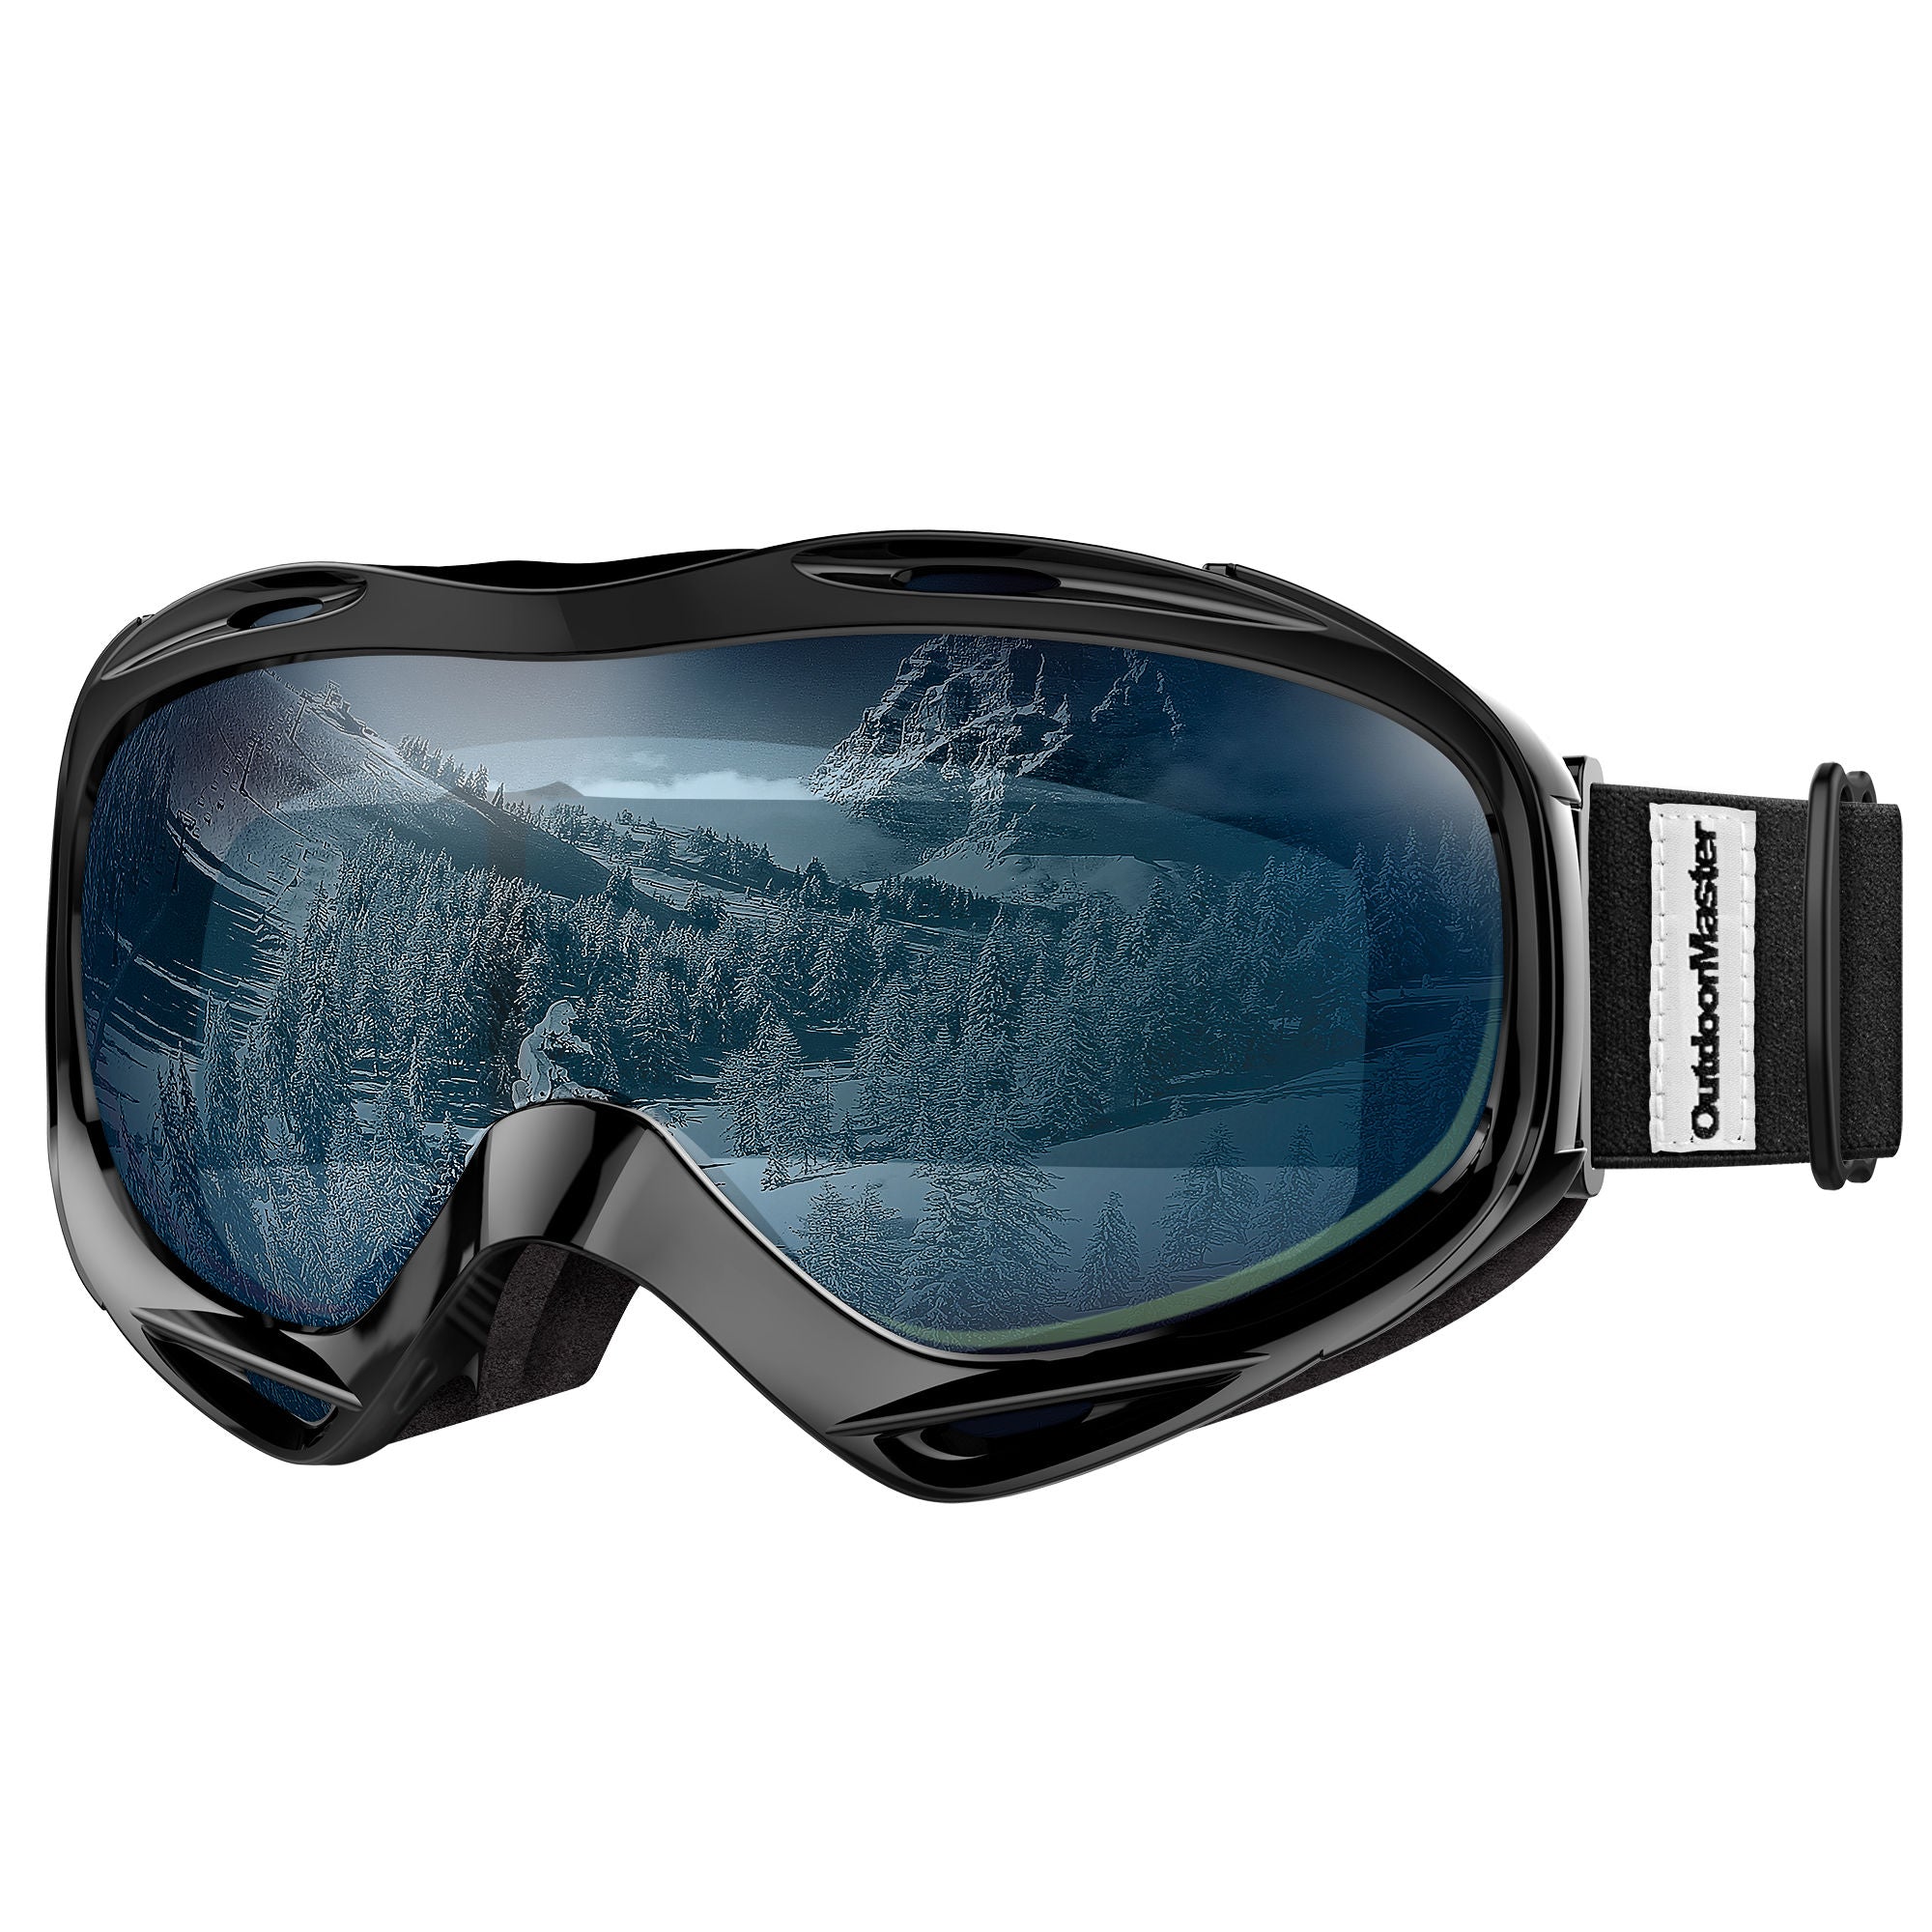 OutdoorMaster OTG Ski Goggles Over Glasses Ski Snowboard Goggles for Men Women